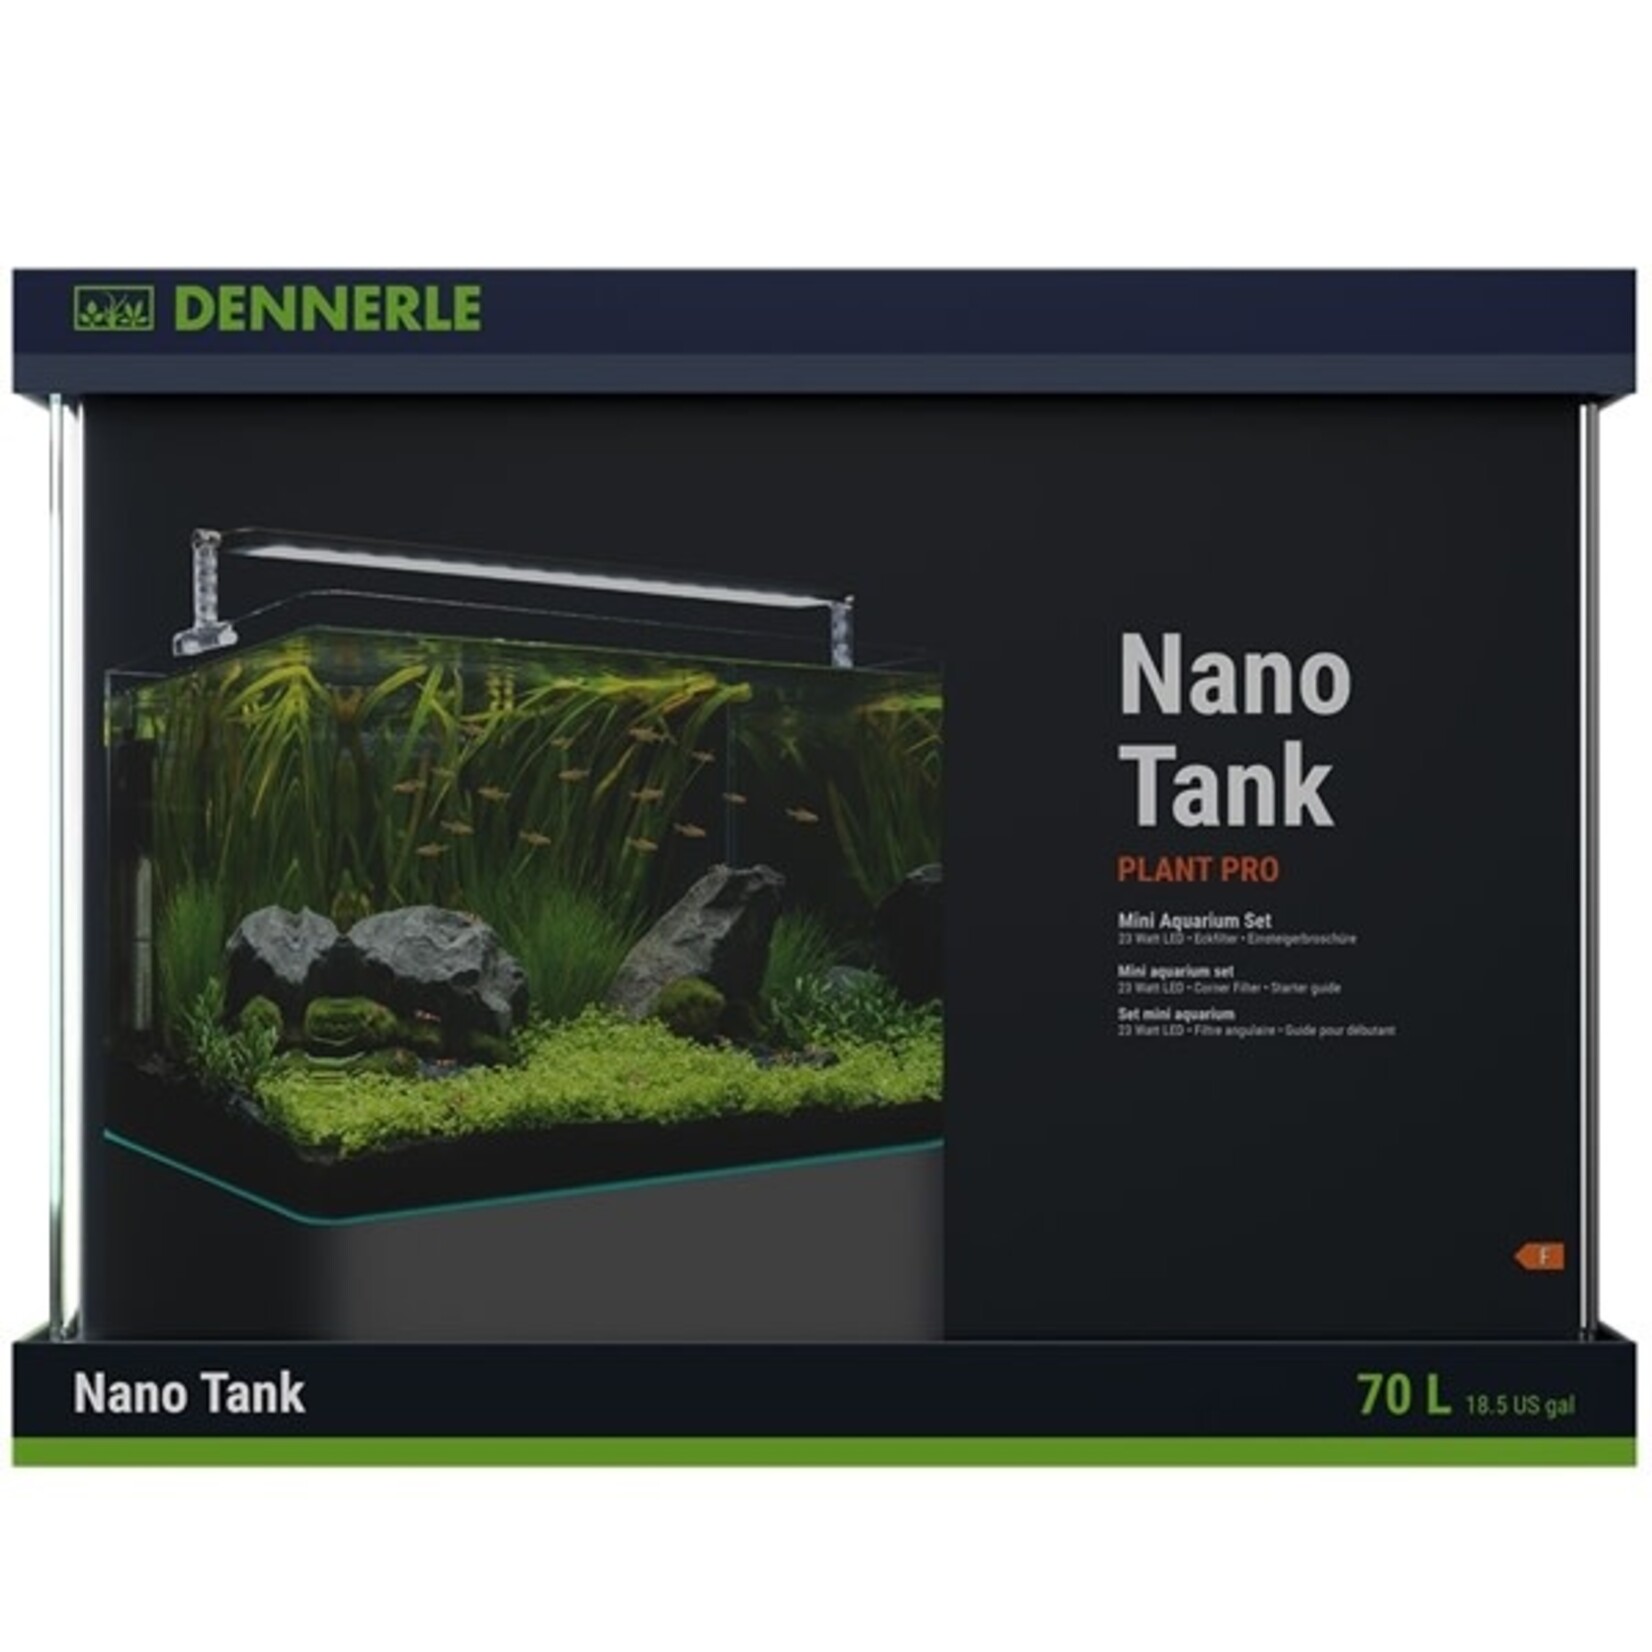 Dennerle nano tank plant pro 70 l